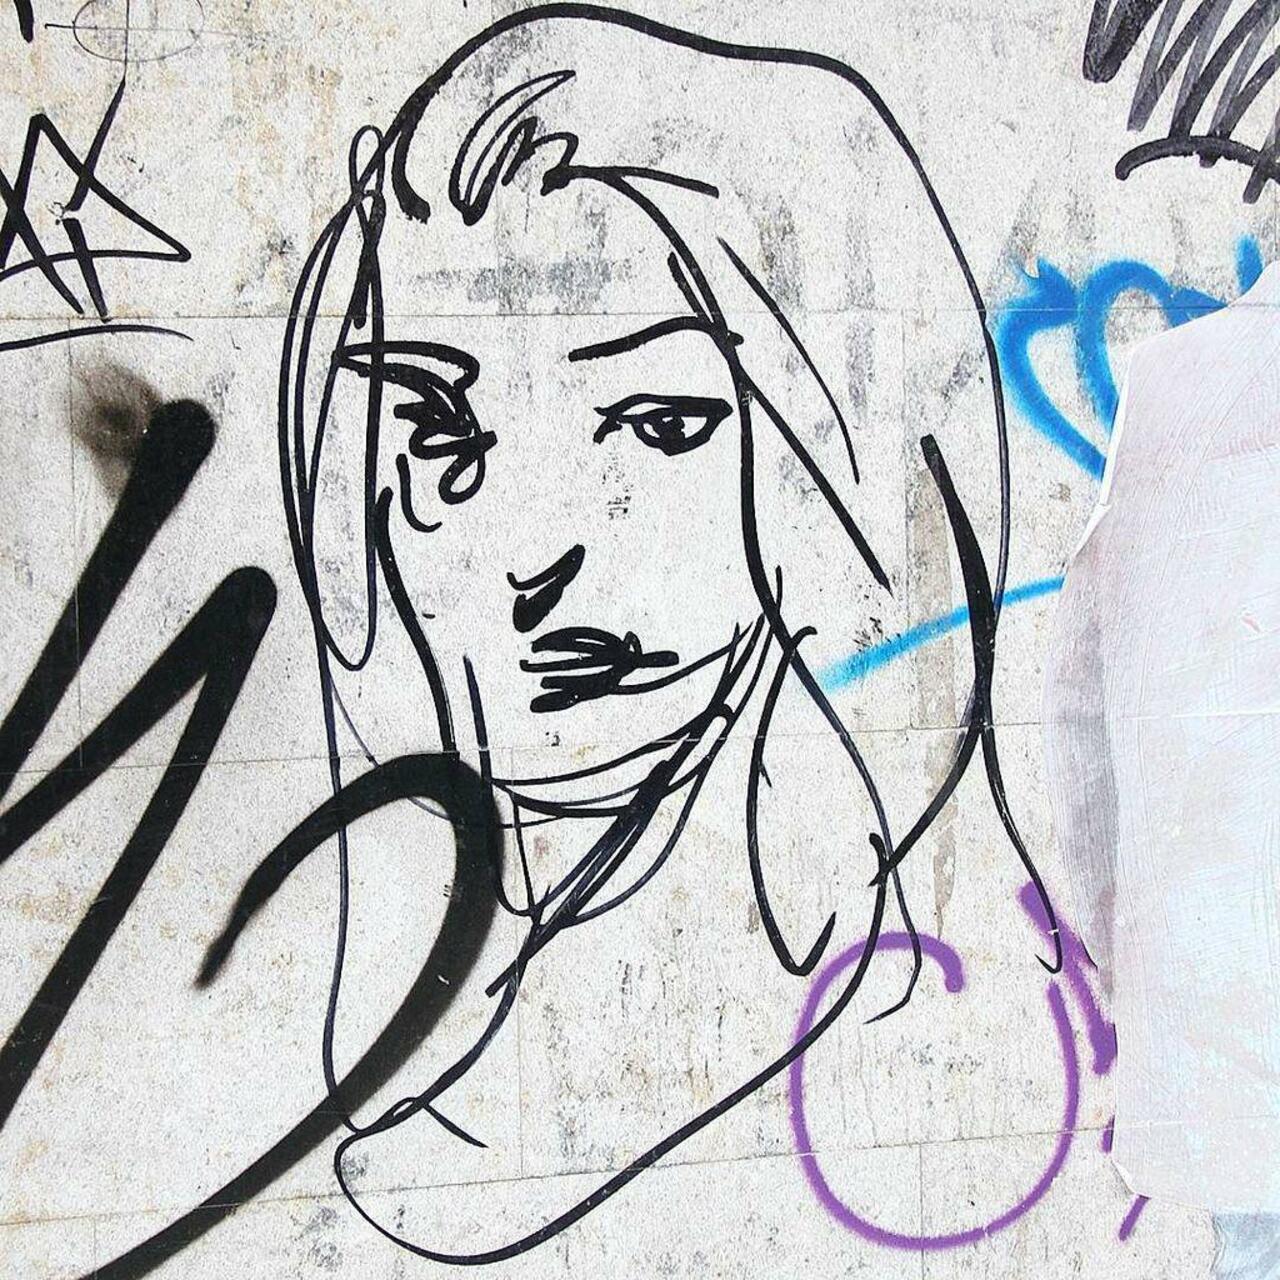 #madrid #madriz #madri #streetart #graffiti #grafite #arteurbano #chueca #artederua #artderue #artecallejero #stree… http://t.co/4T5ZOzTgFR